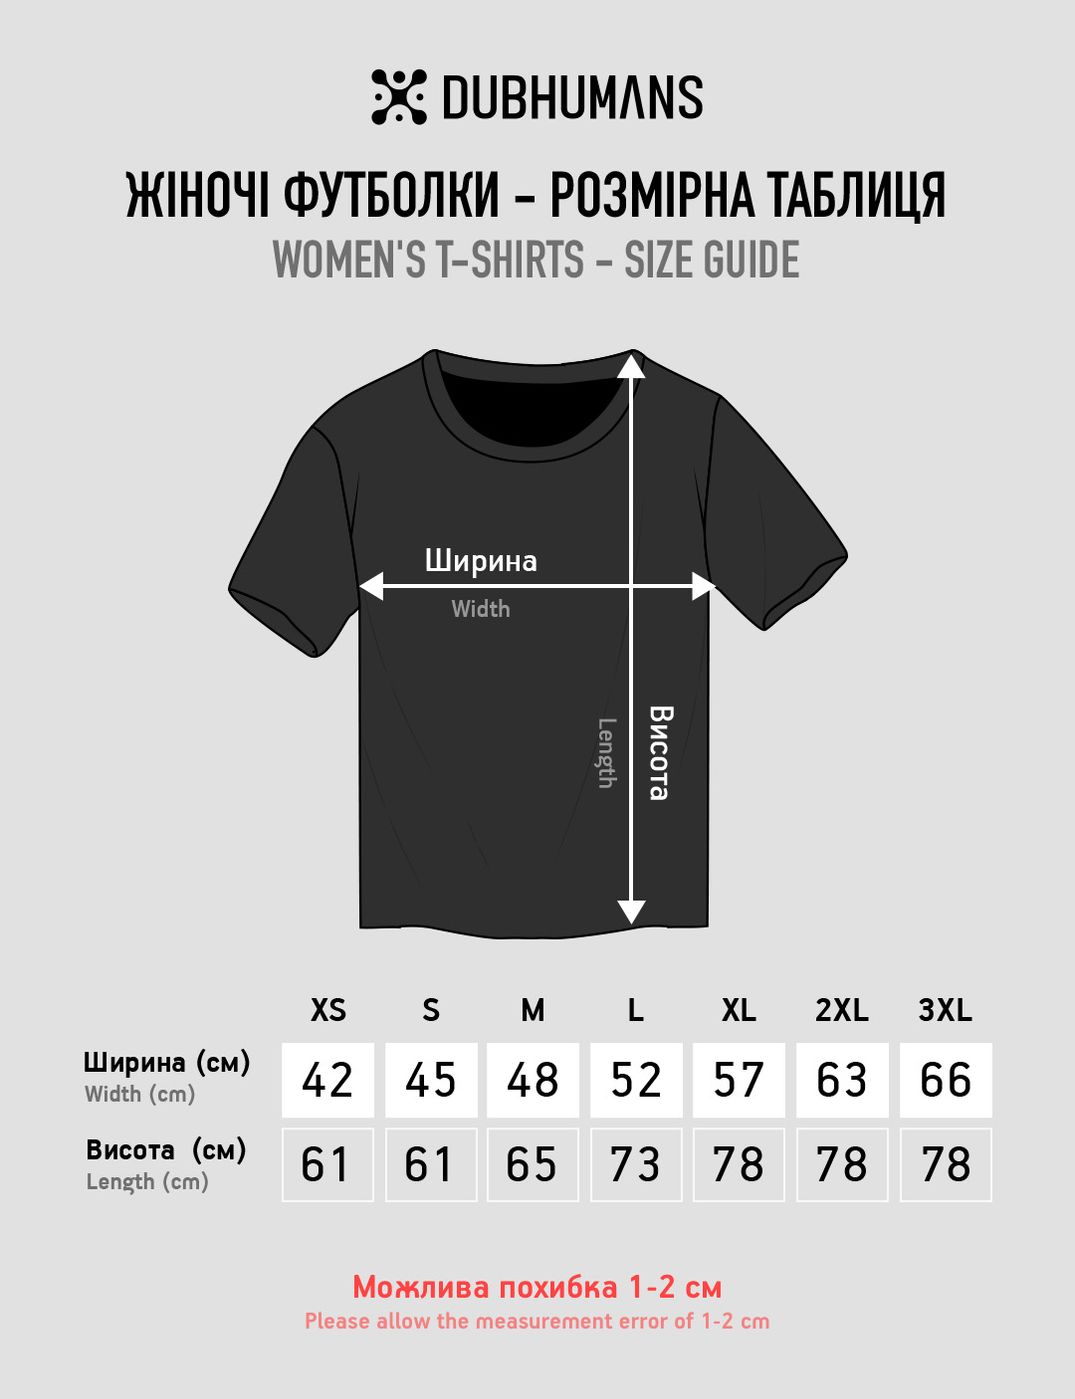 Women's T-shirt "Vinylbolus", Black, M